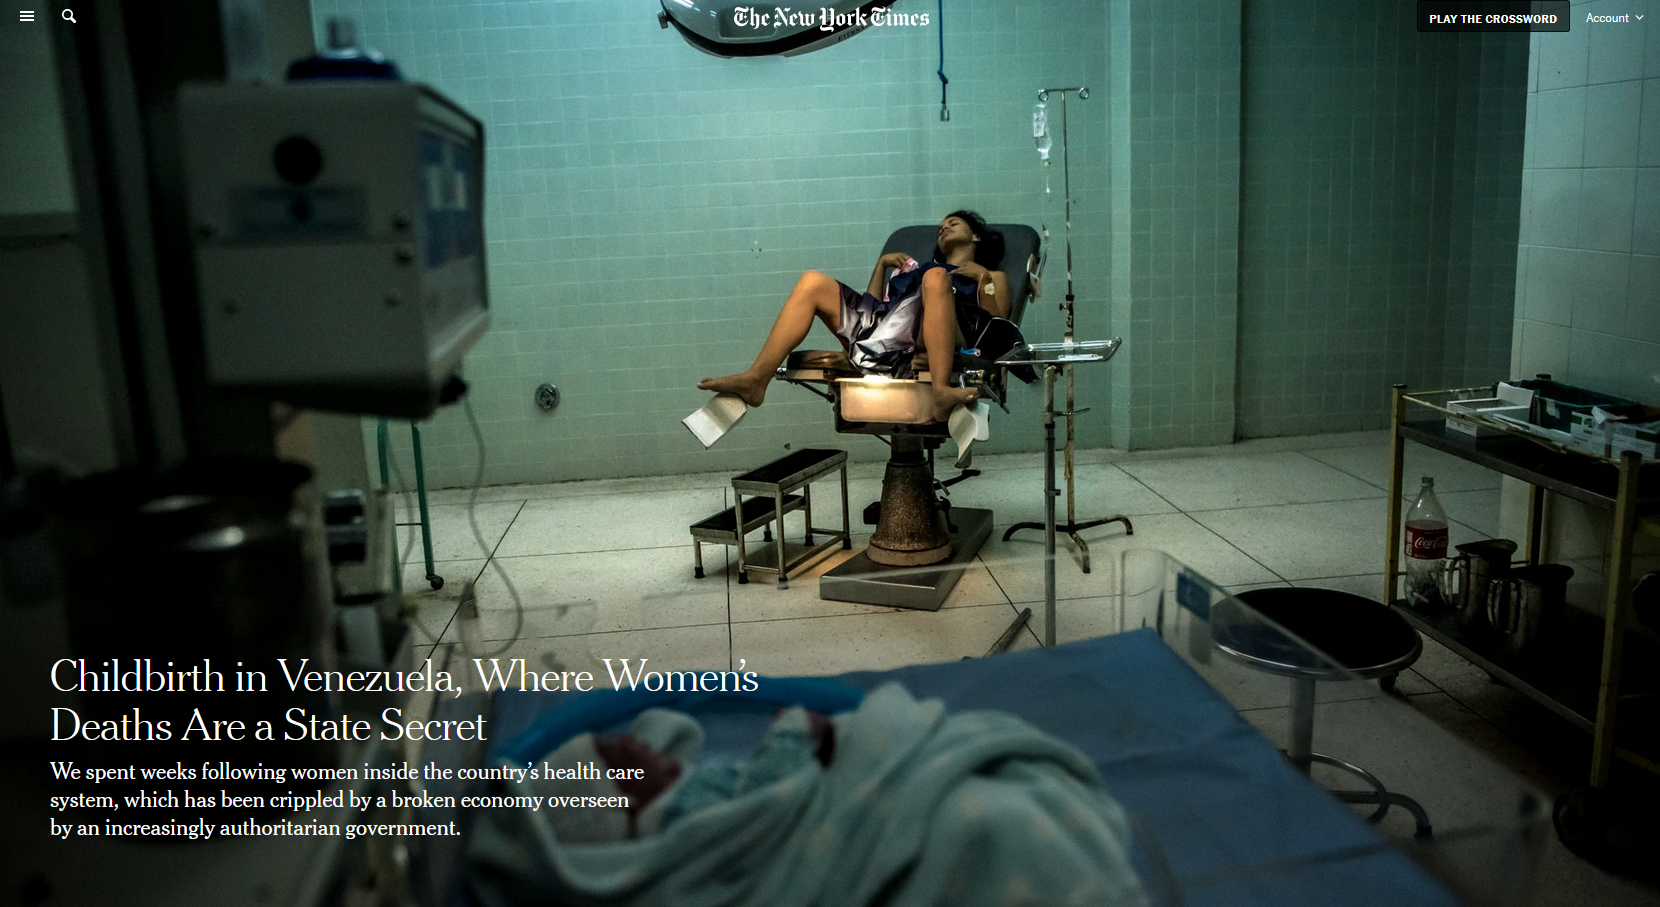 NYT: Childbirth in Venezuela, Where Women’s Deaths Are a State Secret